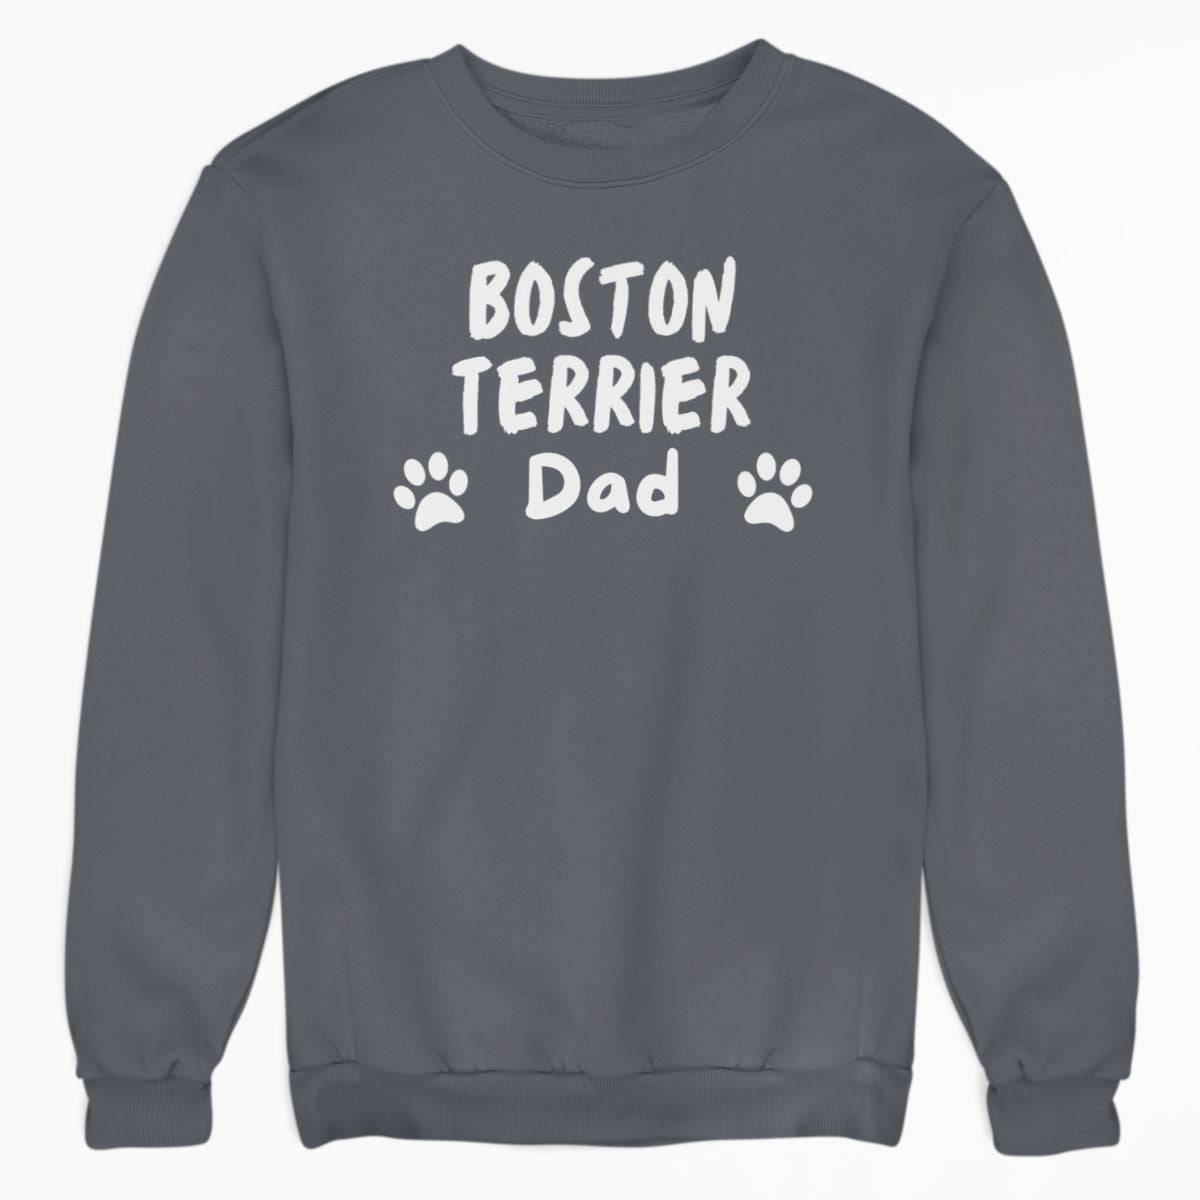 Boston Terrier Dad Shirt